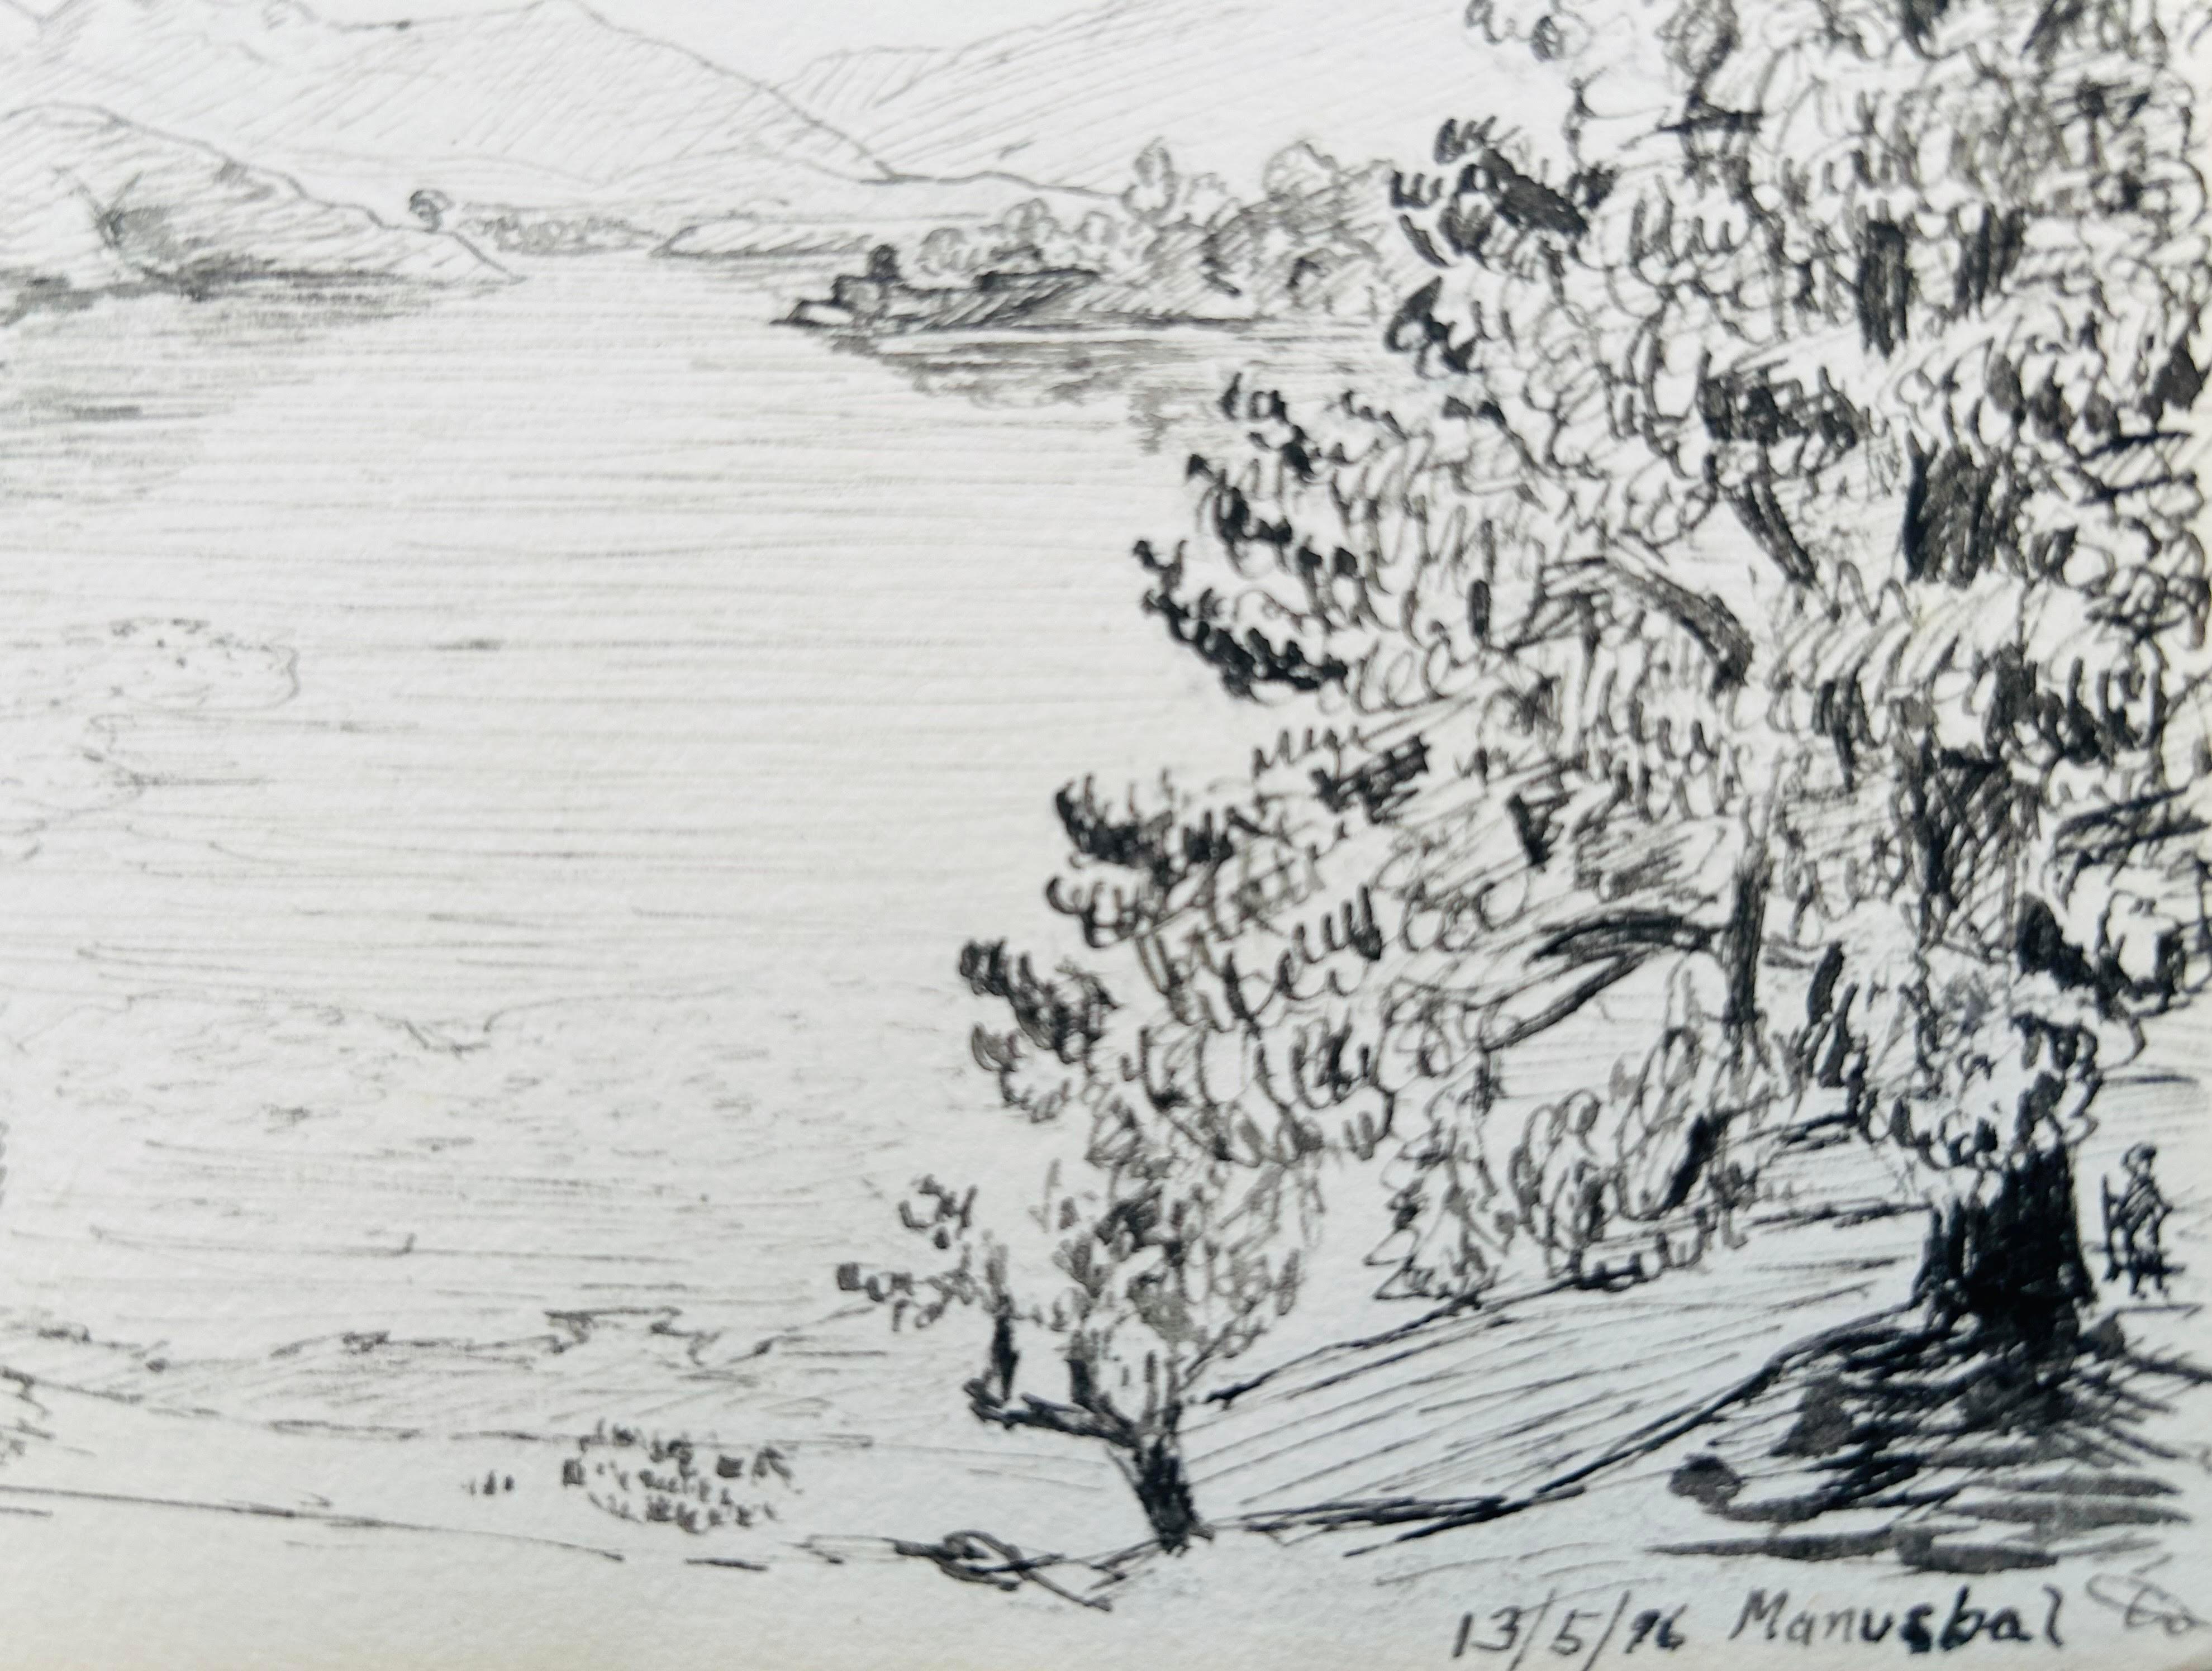 India 3 X 19. Jahrhundert Kaschmir NW Frontier Field Sketches Manasbal Lake, Kashmir im Angebot 7